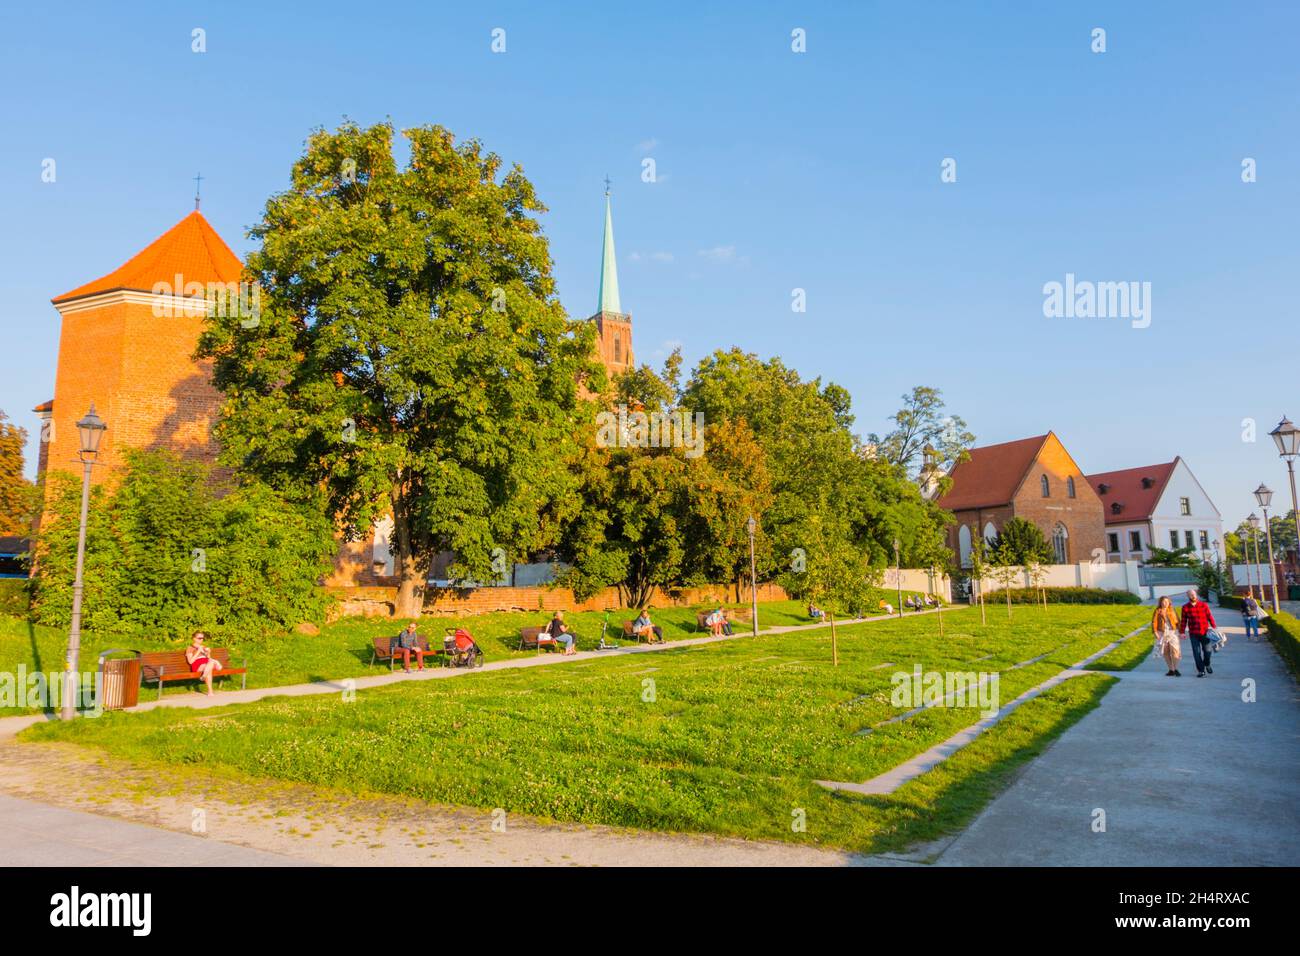 Labirynt W trawie, parc labyrinthe, Ostrów Tumski, Cathedral Island, Wroclaw,Pologne Banque D'Images